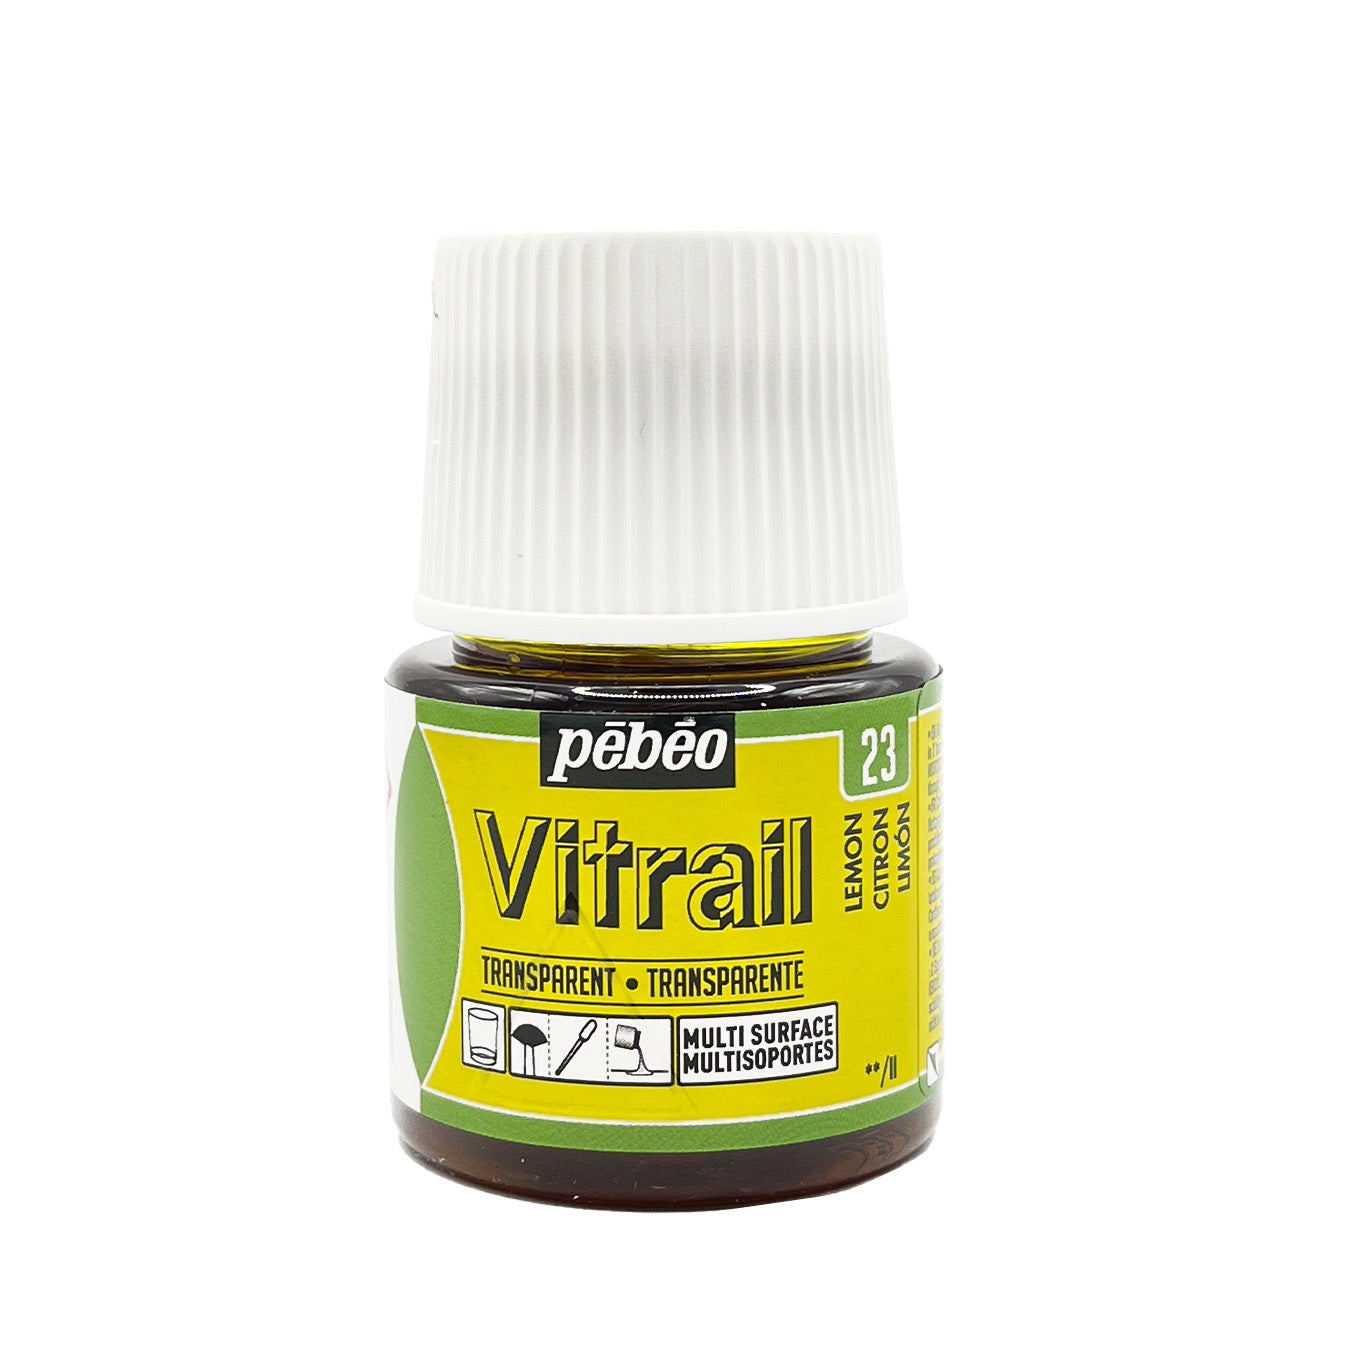 VITRAL - Transparent dye - Lemon